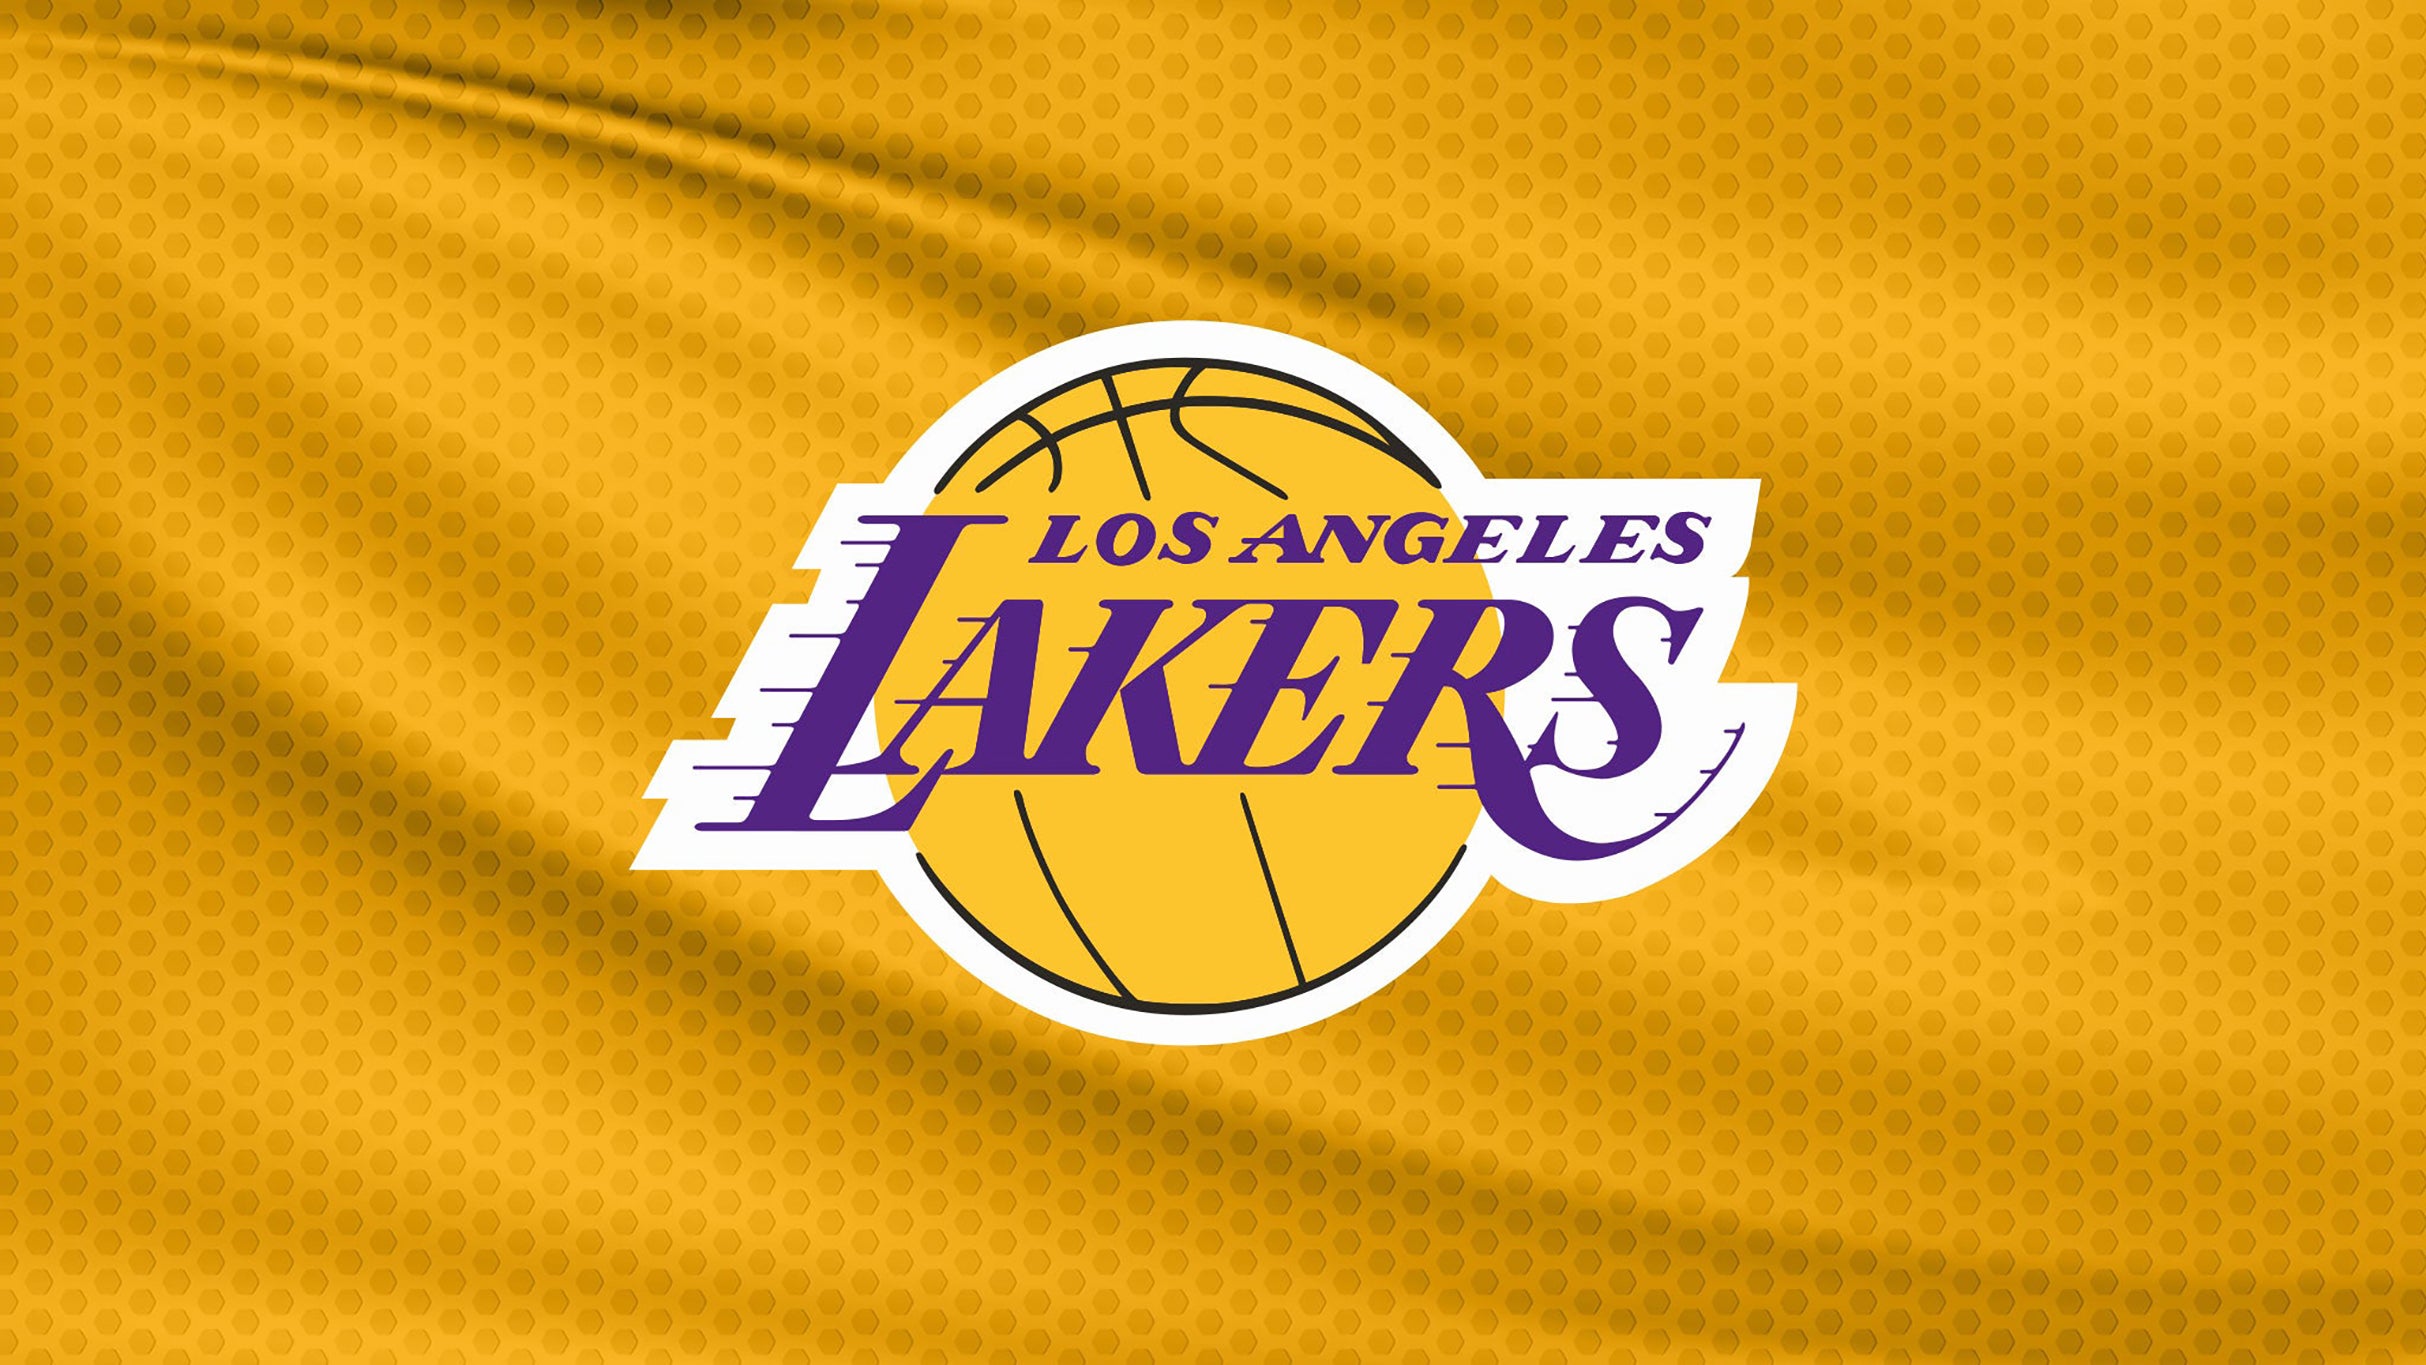 Los Angeles Lakers vs Minnesota Timberwolves in Los Angeles promo photo for TM+ Resale presale offer code